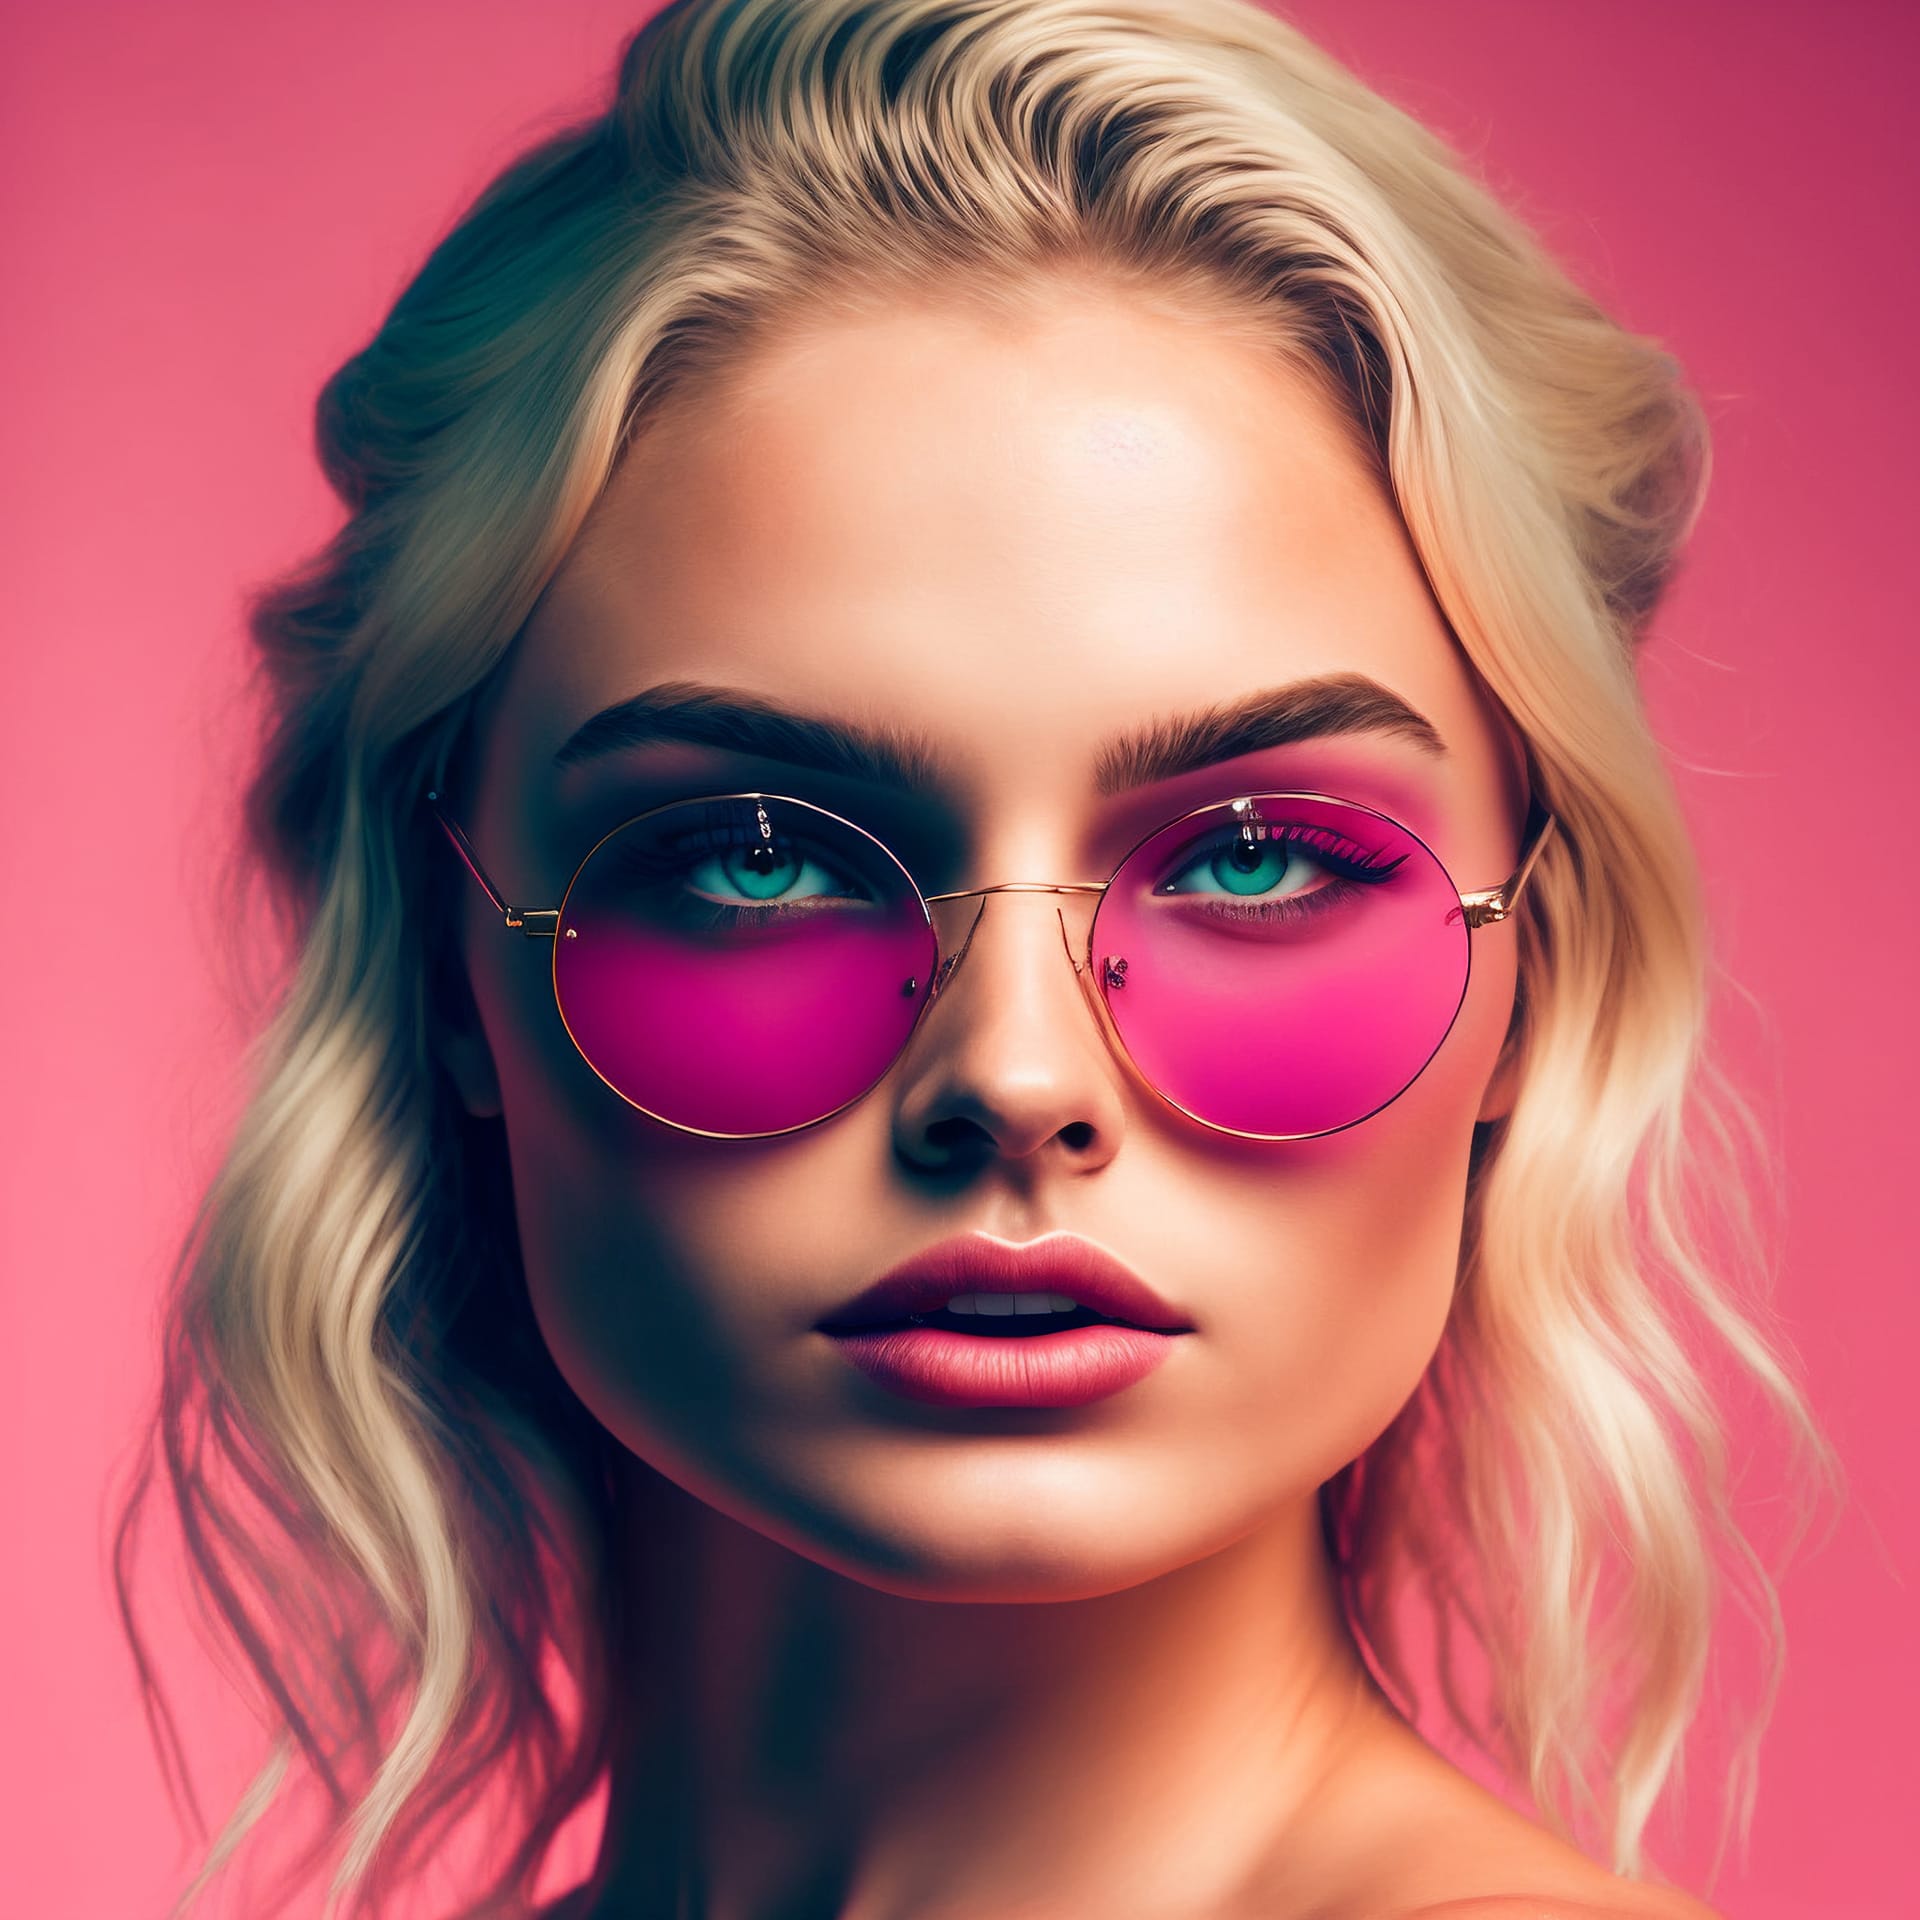 Digital portrait young beautiful blonde woman creative digital illustration painting